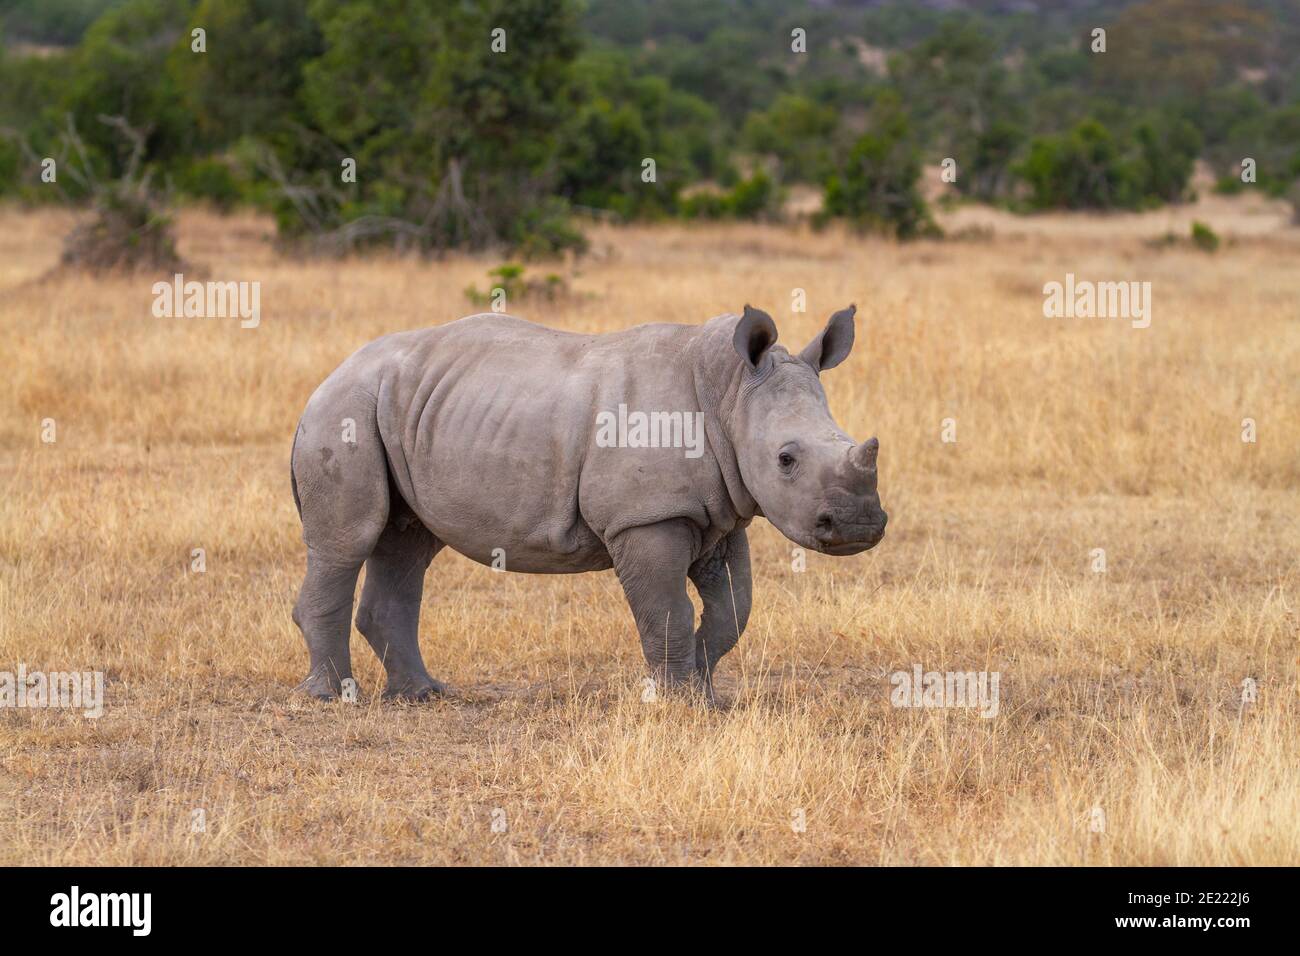 Southern white rhinoceros calf (Ceratotherium simum) in Ol Pejeta Conservancy, Kenya, Africa. Also Square-lipped rhino, cute baby animal Stock Photo